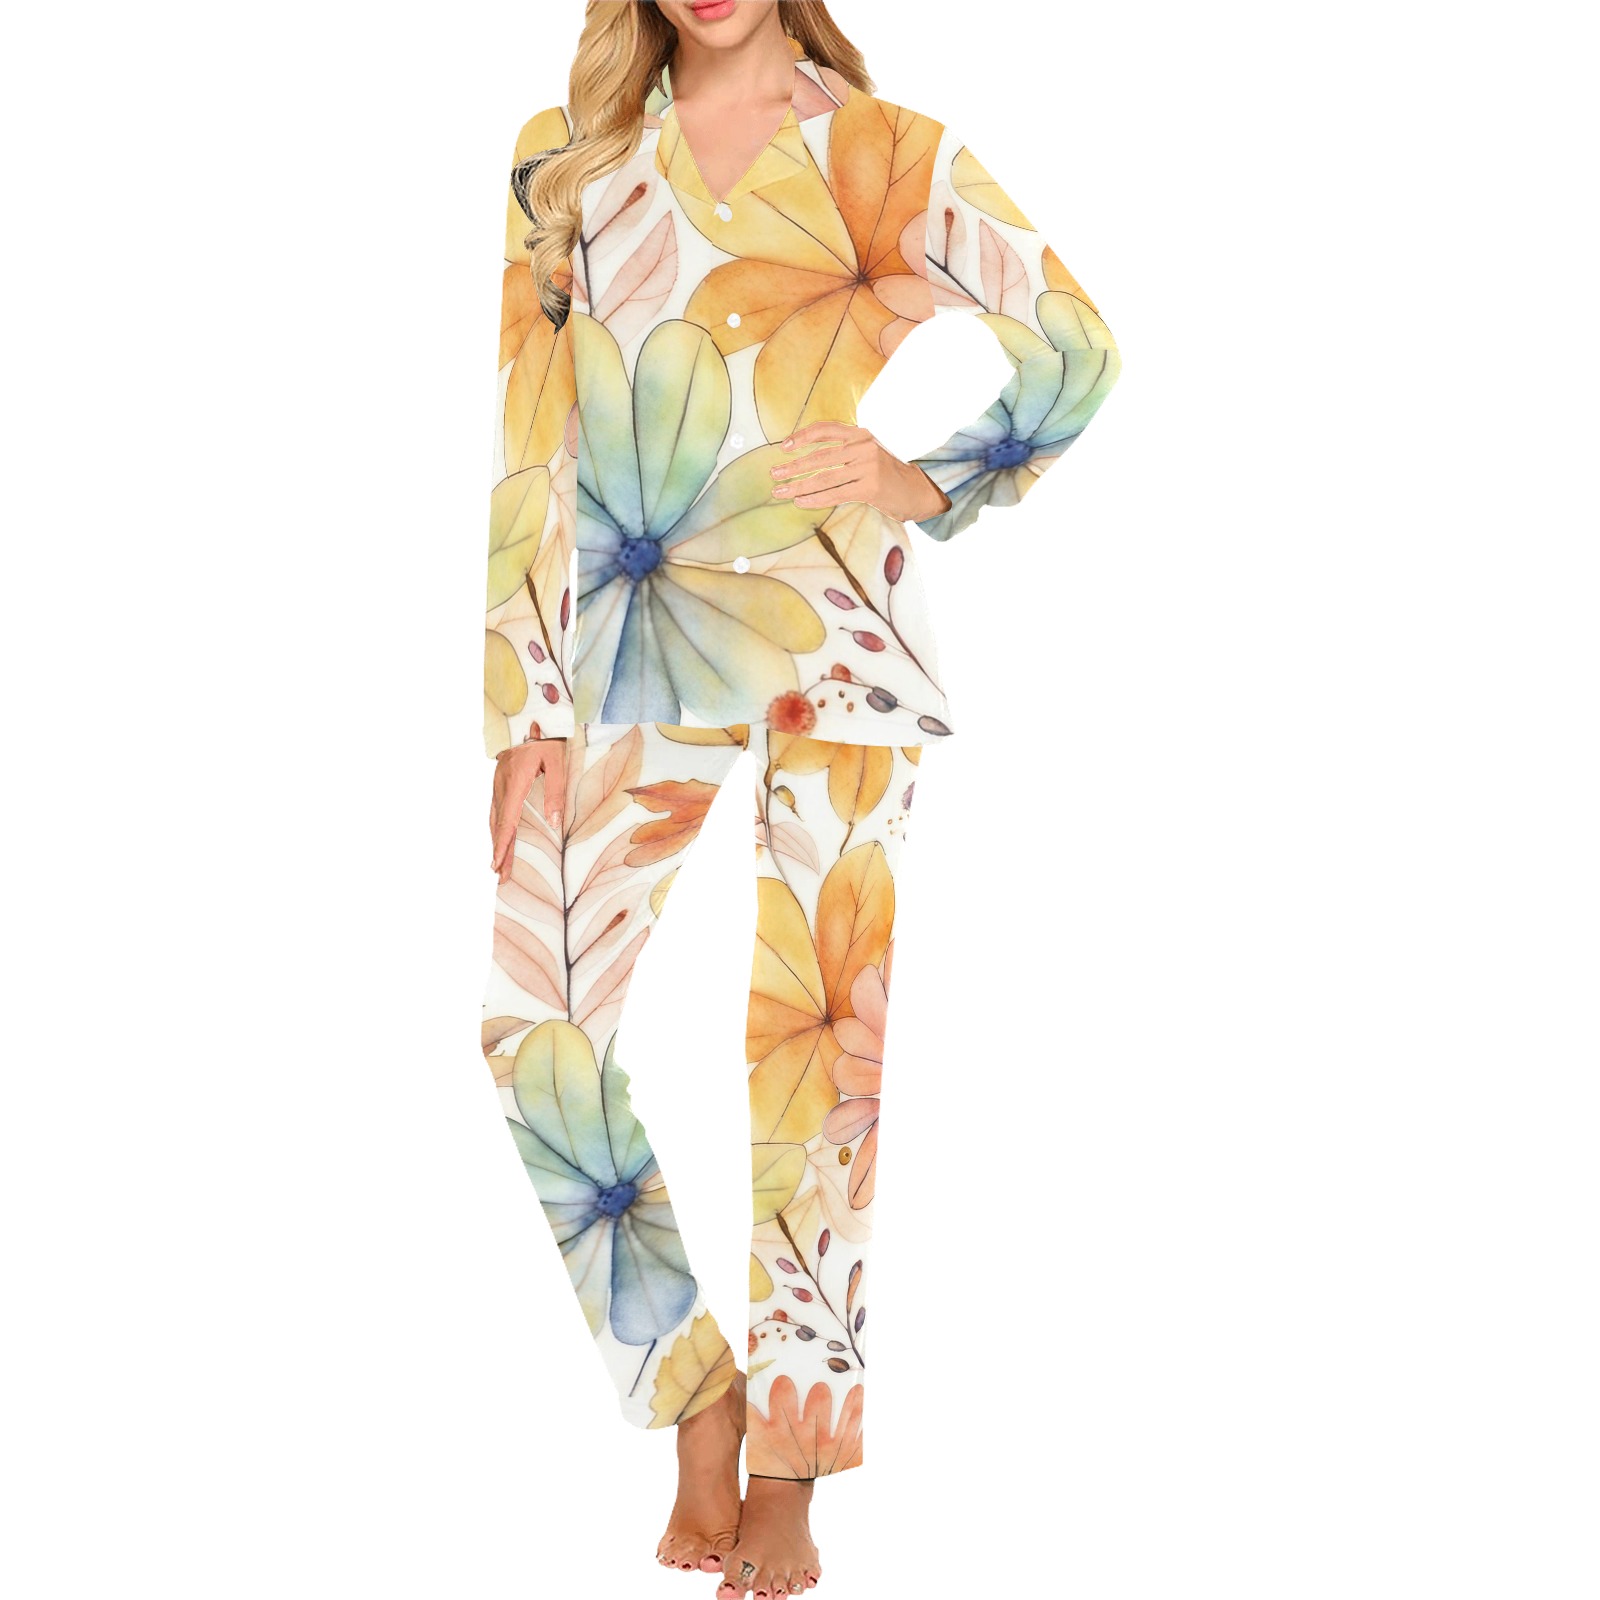 Watercolor Floral 2 Women's Long Pajama Set